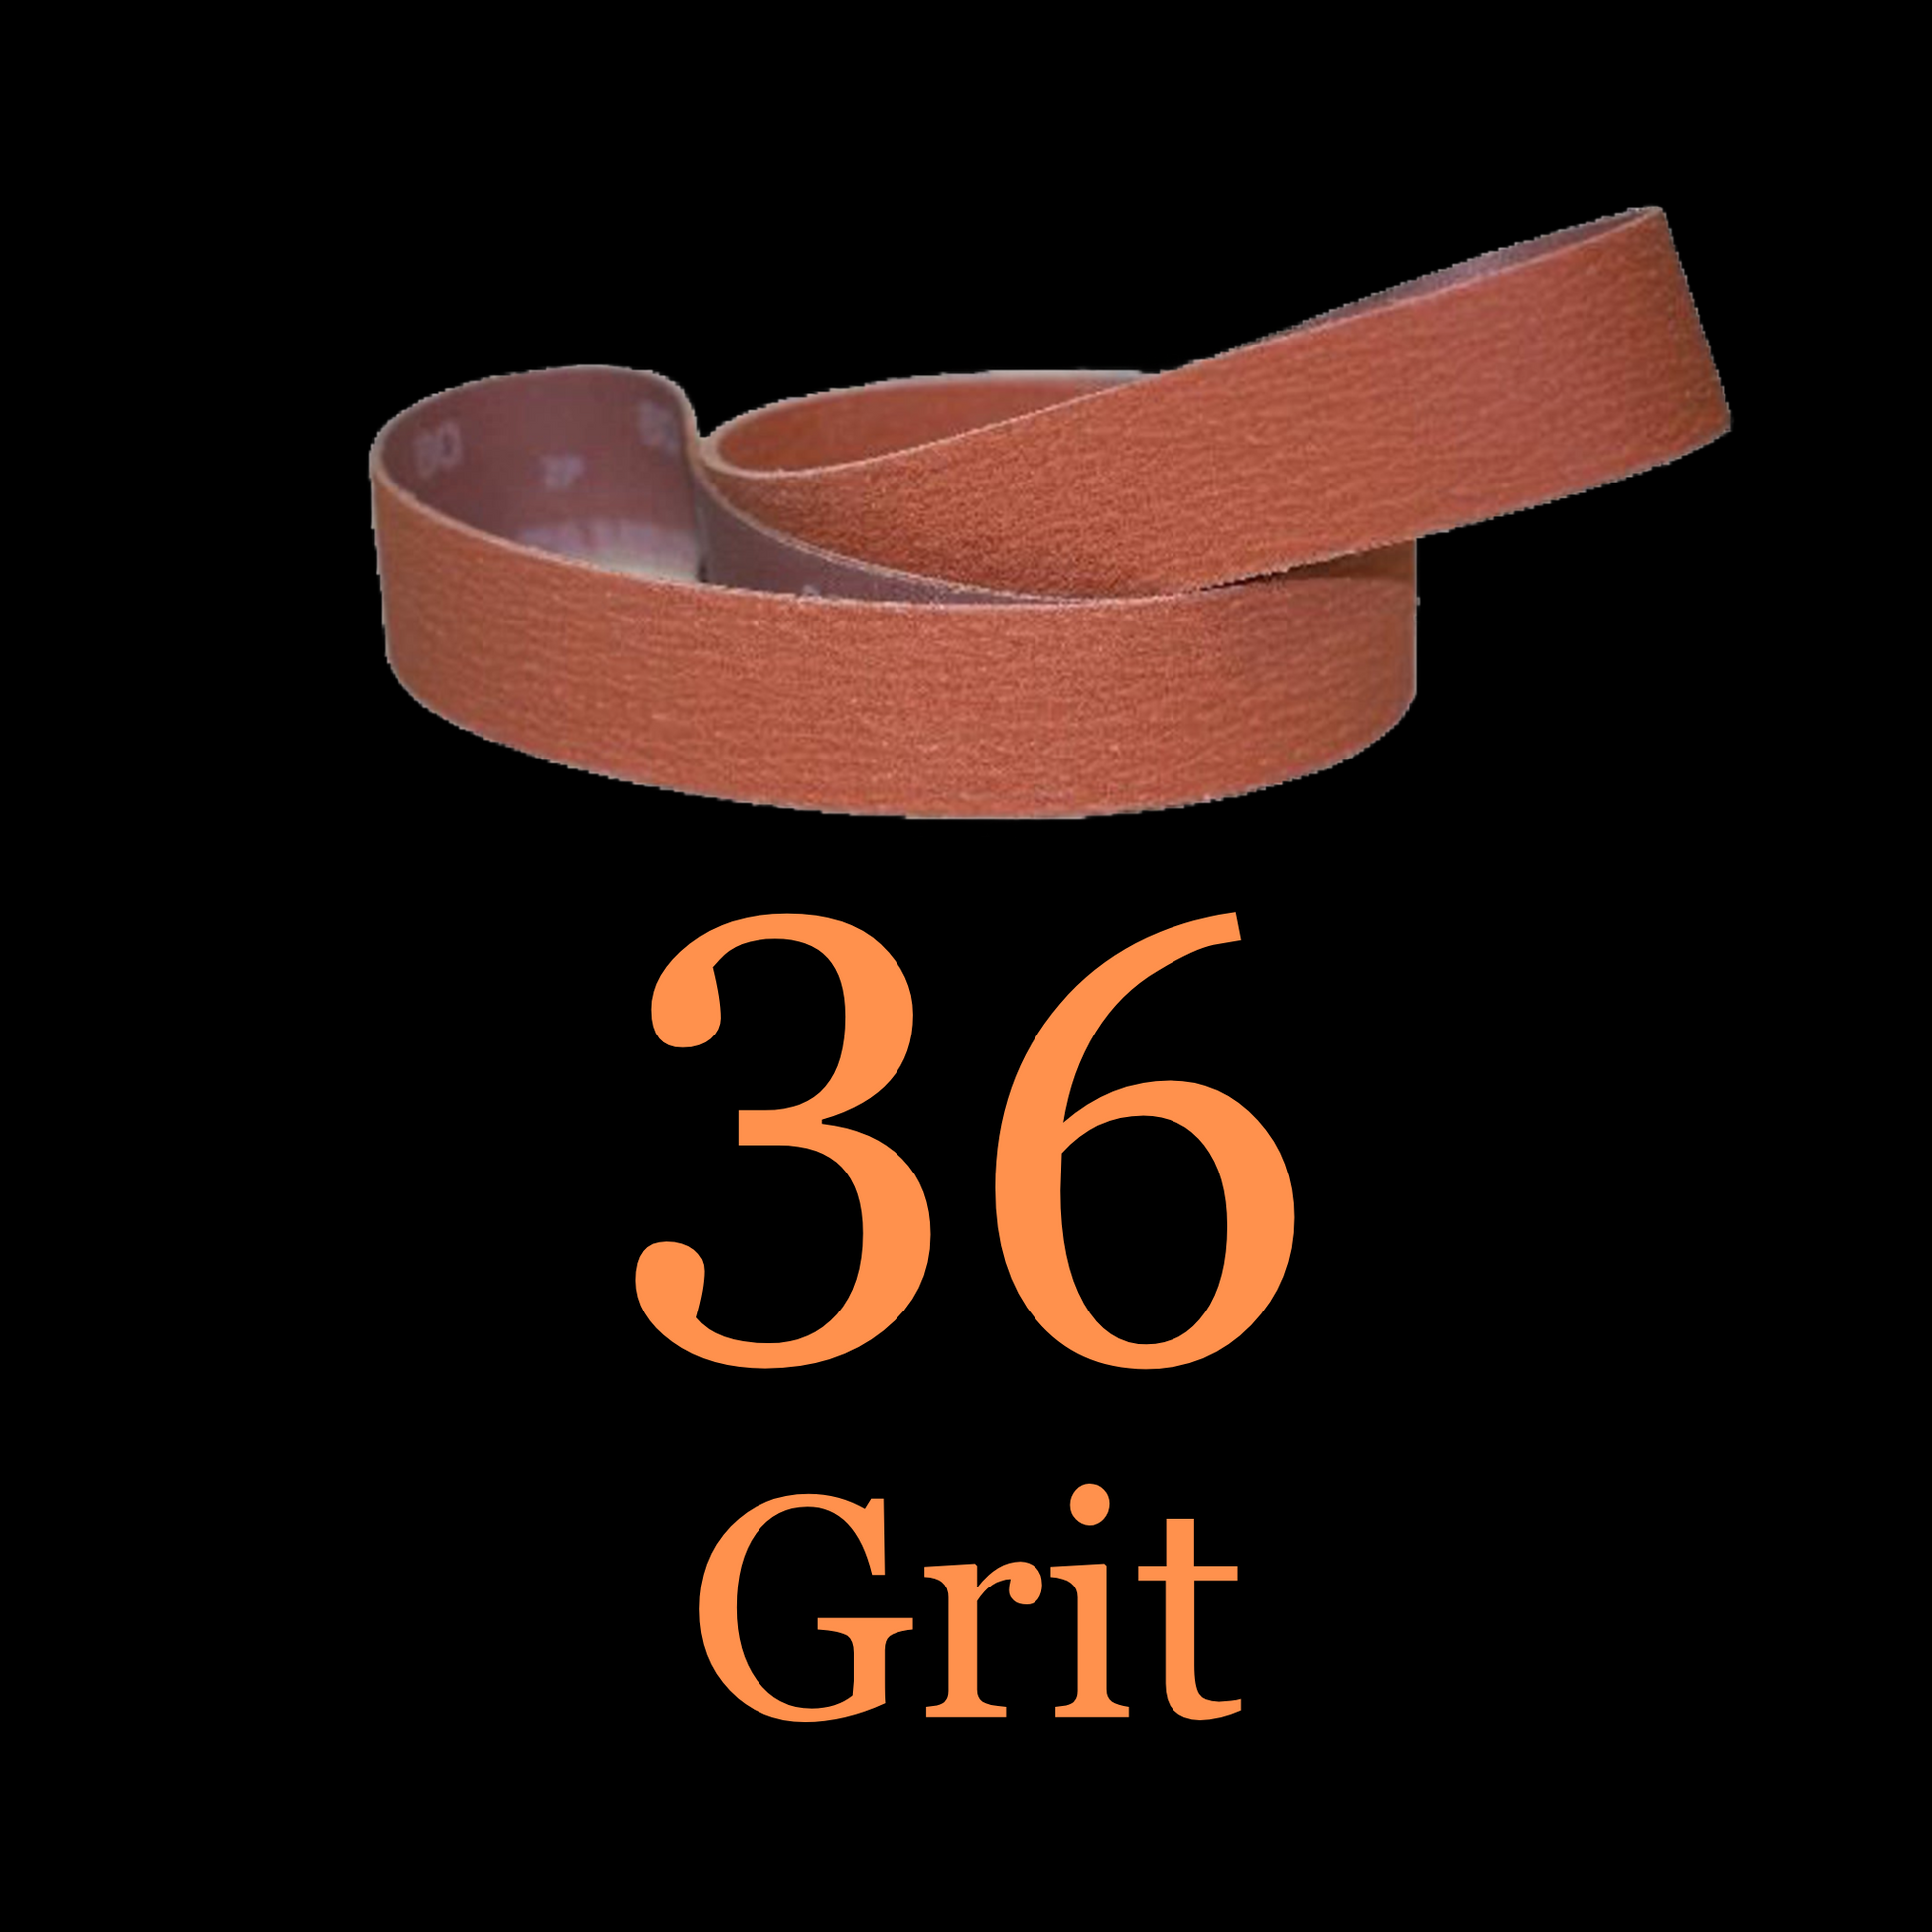 2” x 42” Blaze Ceramic Belt 36 Grit